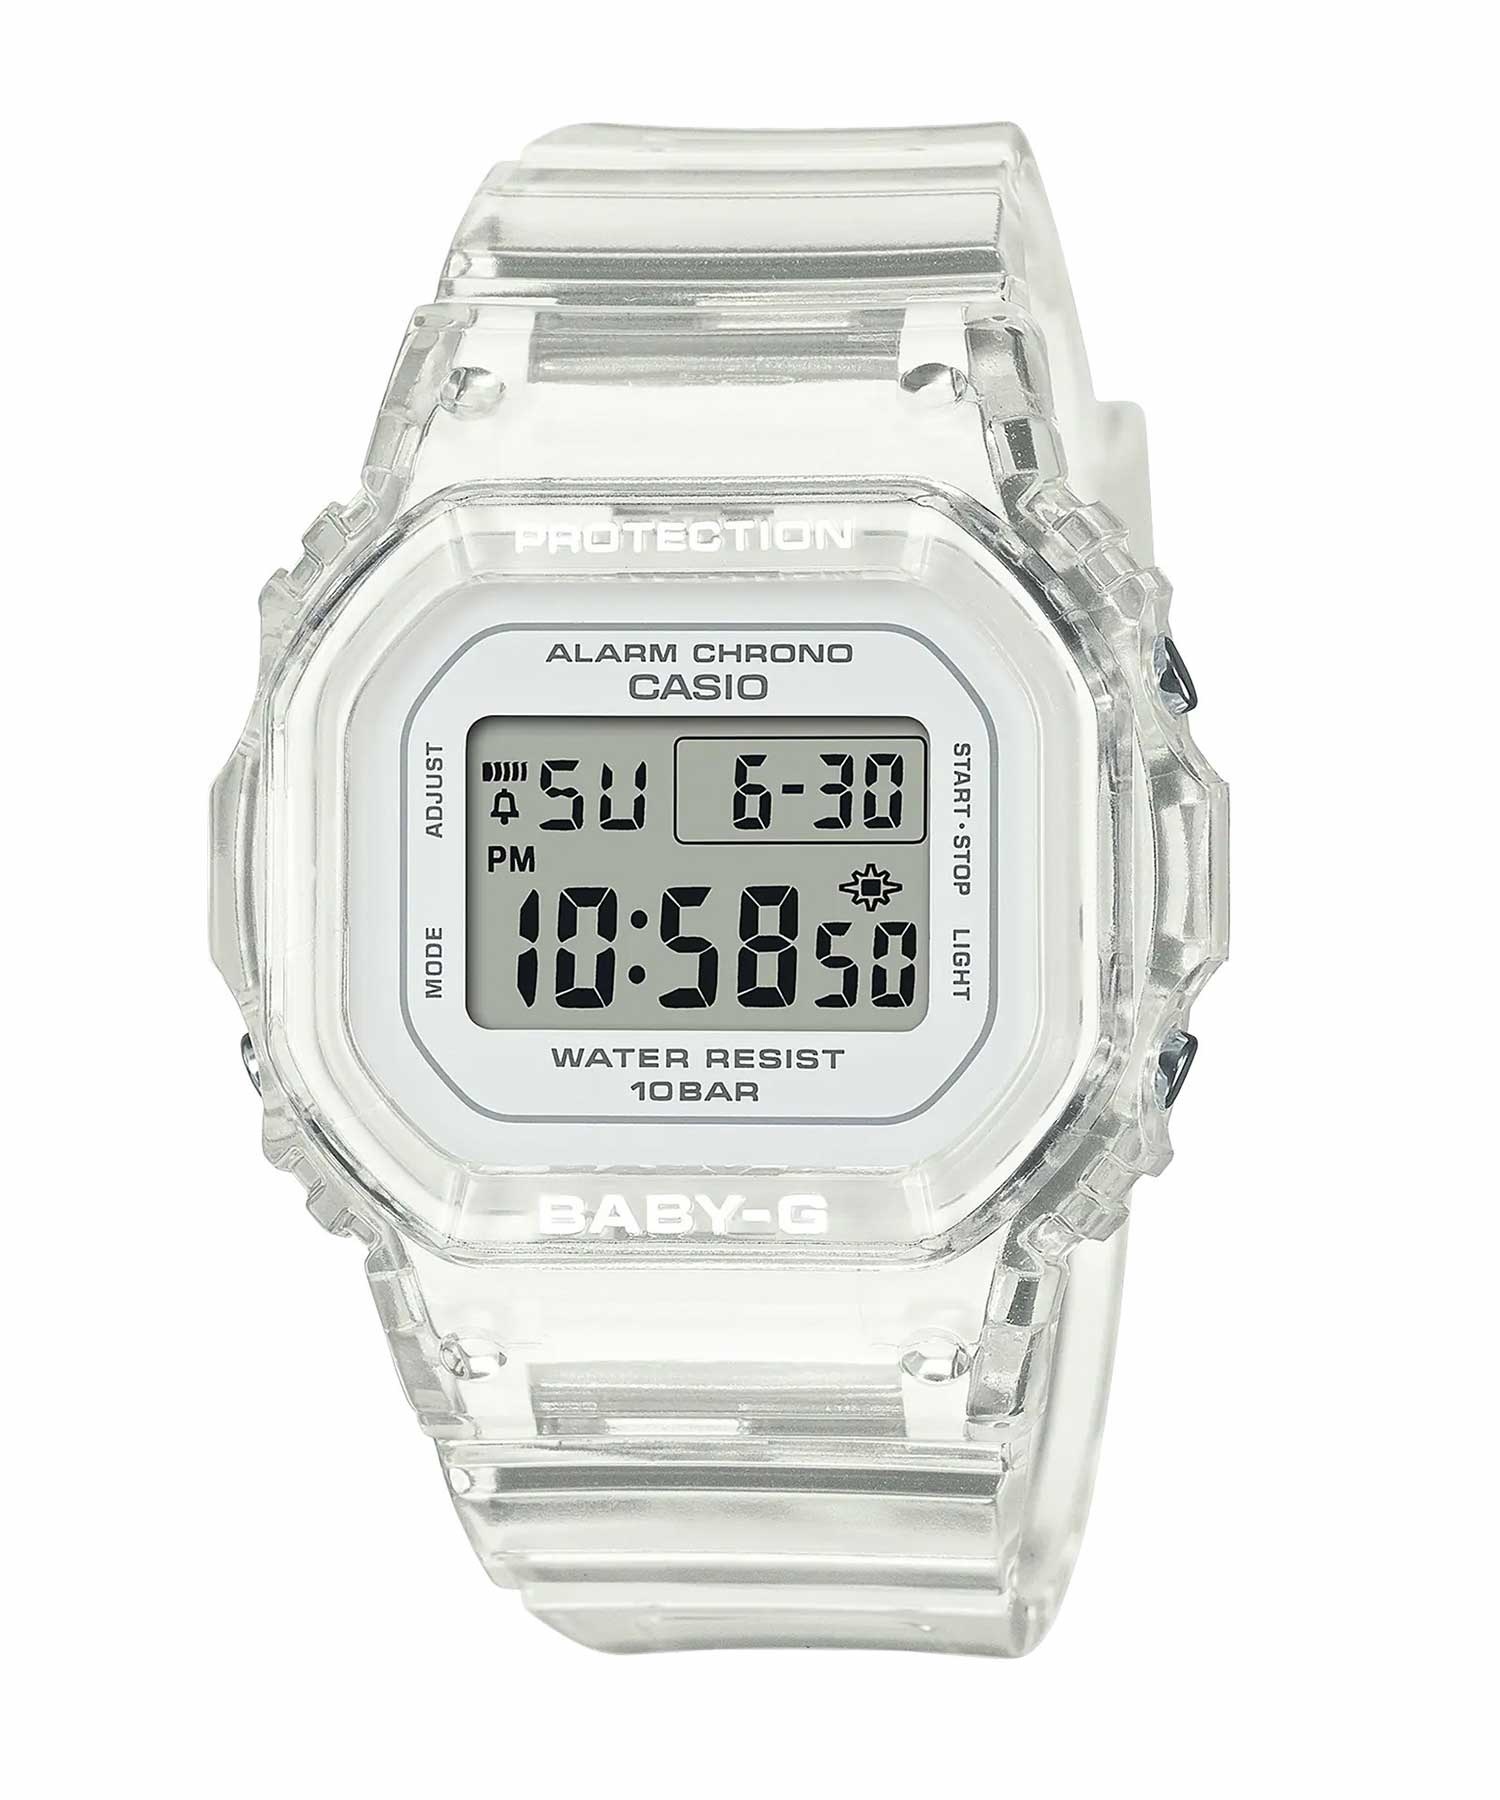 BABY-G ベイビージー 時計 腕時計 BGD-565US-7JF(CL-FREE)